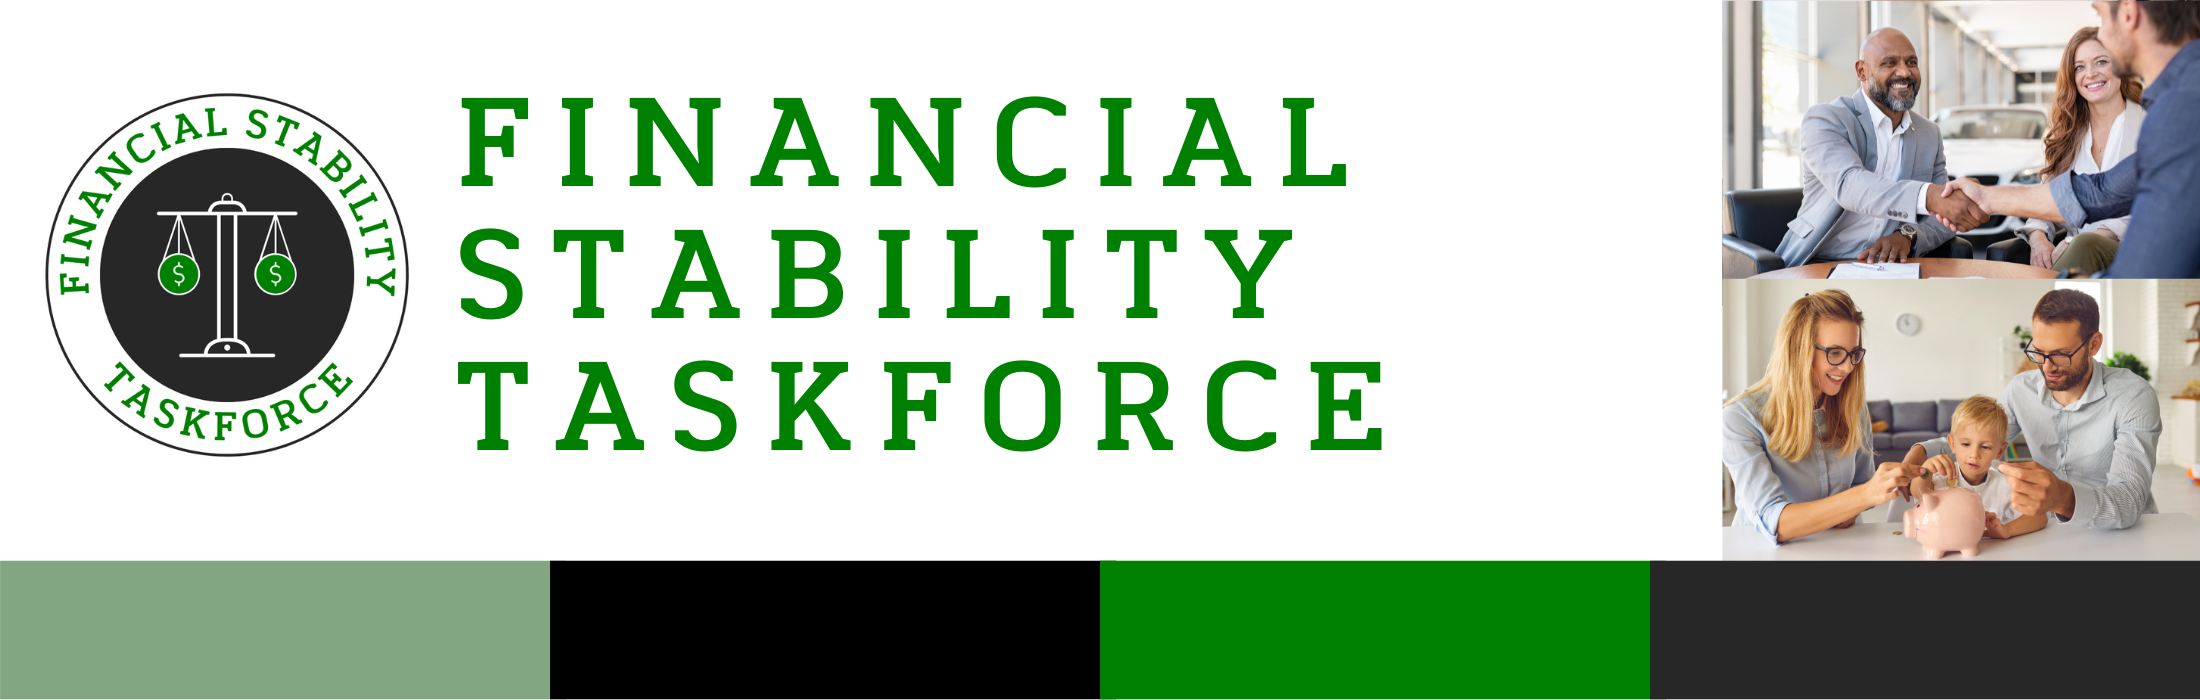 Financial Stability Taskforce